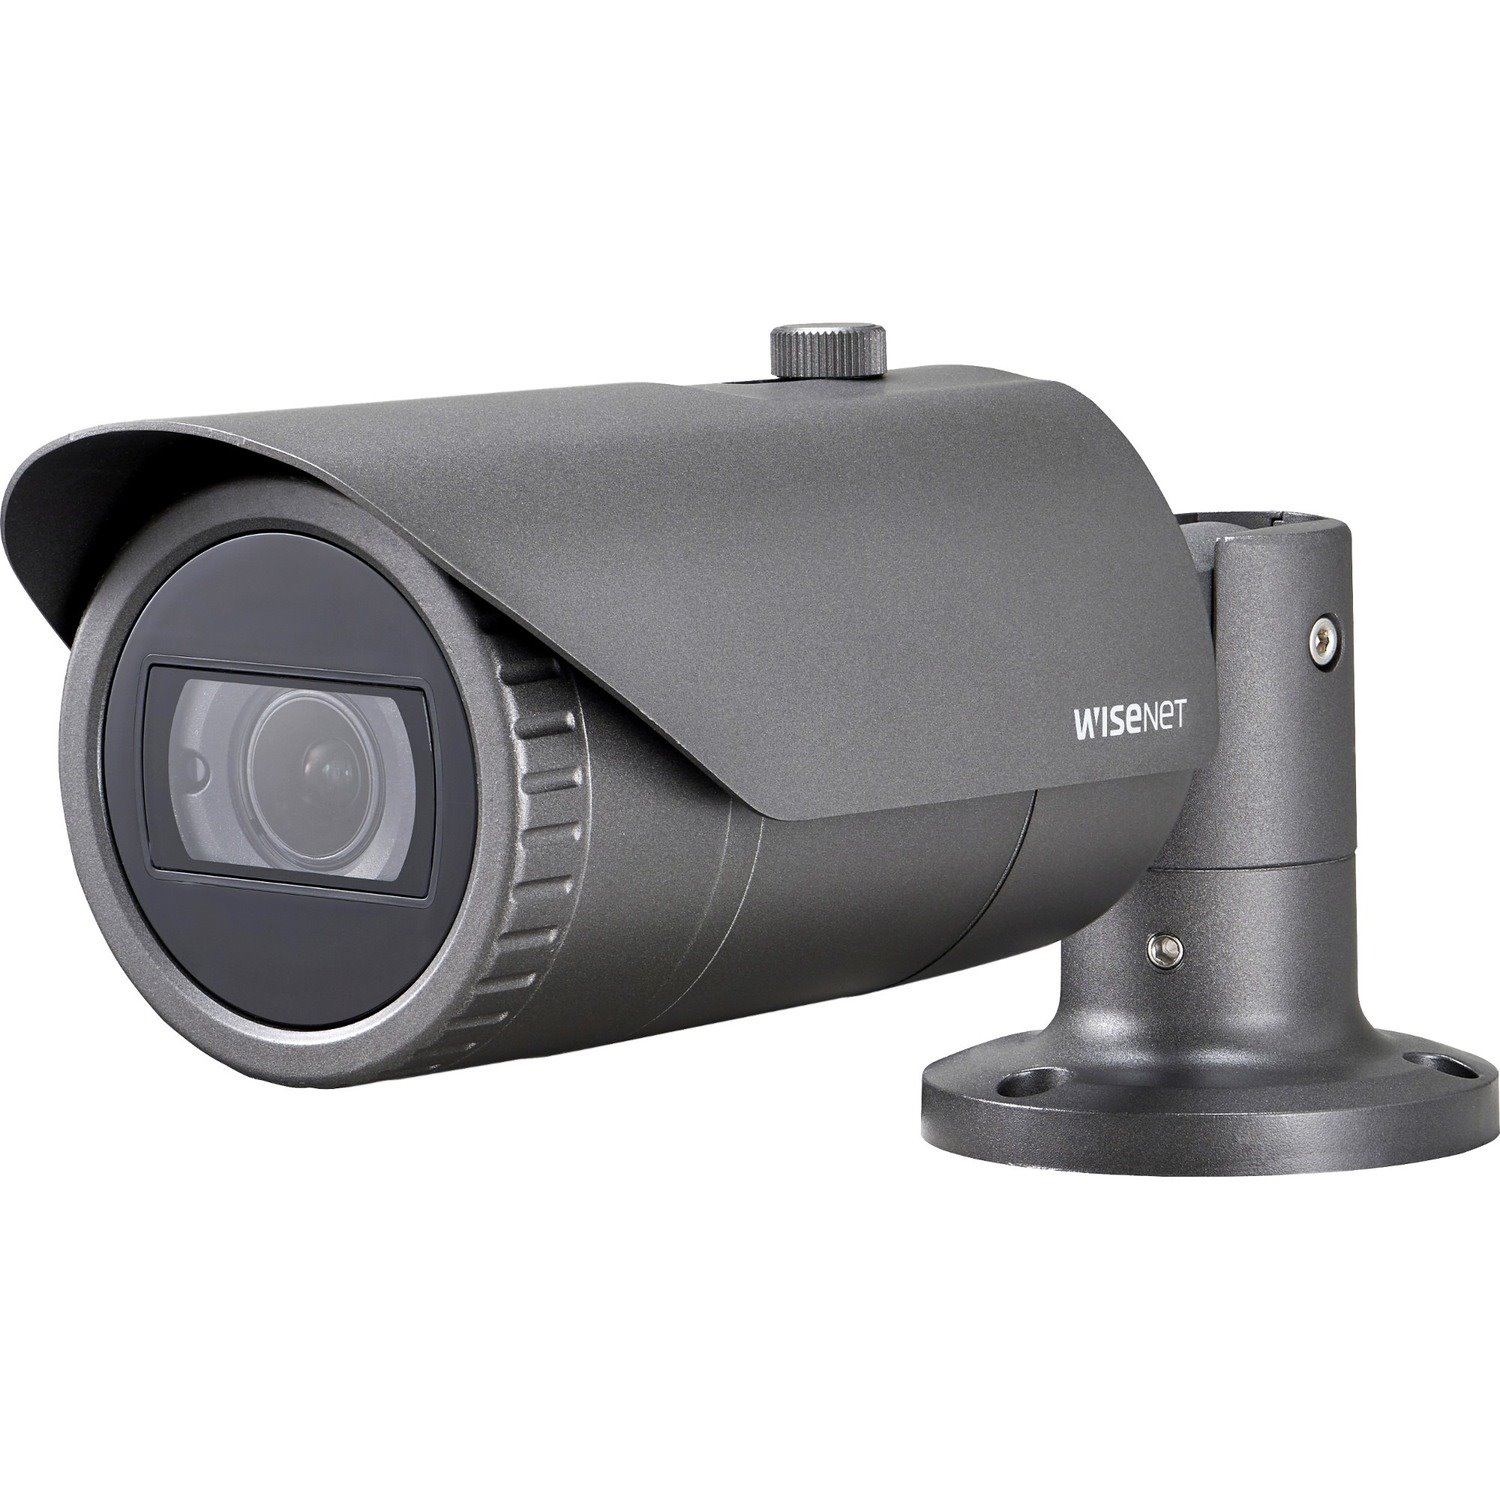 Wisenet HCO-6080R 2 Megapixel Indoor/Outdoor Full HD Surveillance Camera - Colour - Bullet - Dark Grey